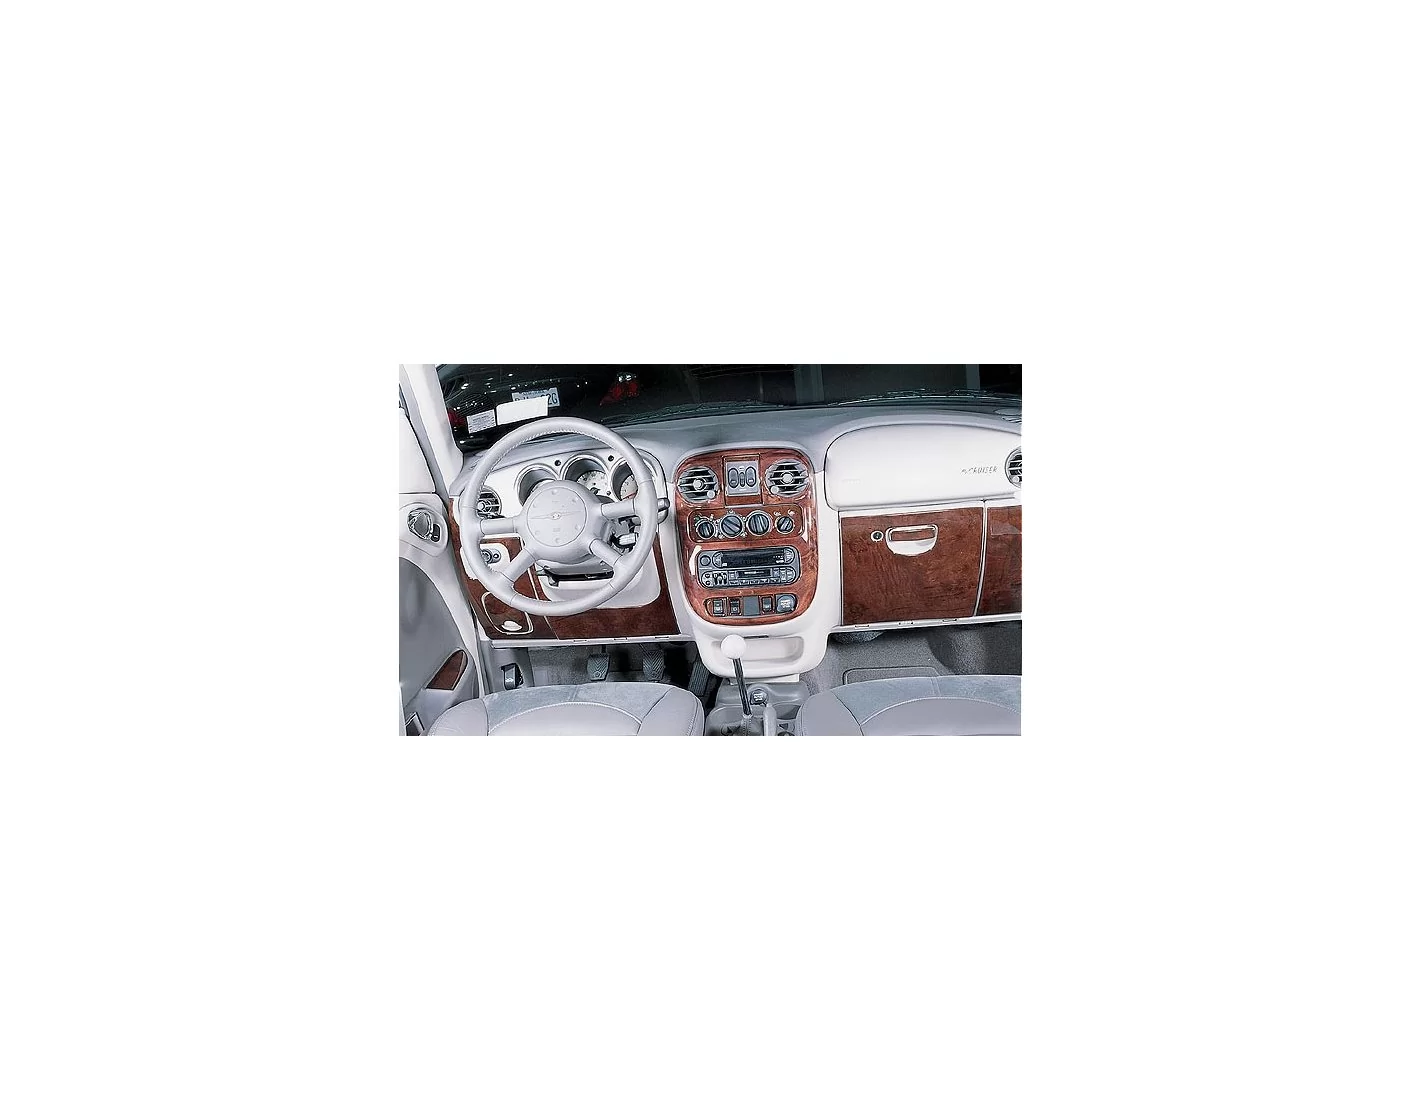 Chrysler PT Cruiser 2001-2005 Full Set, With Power Mirrors, Automatic Gearbox, 24 Parts set Interior BD Dash Trim Kit